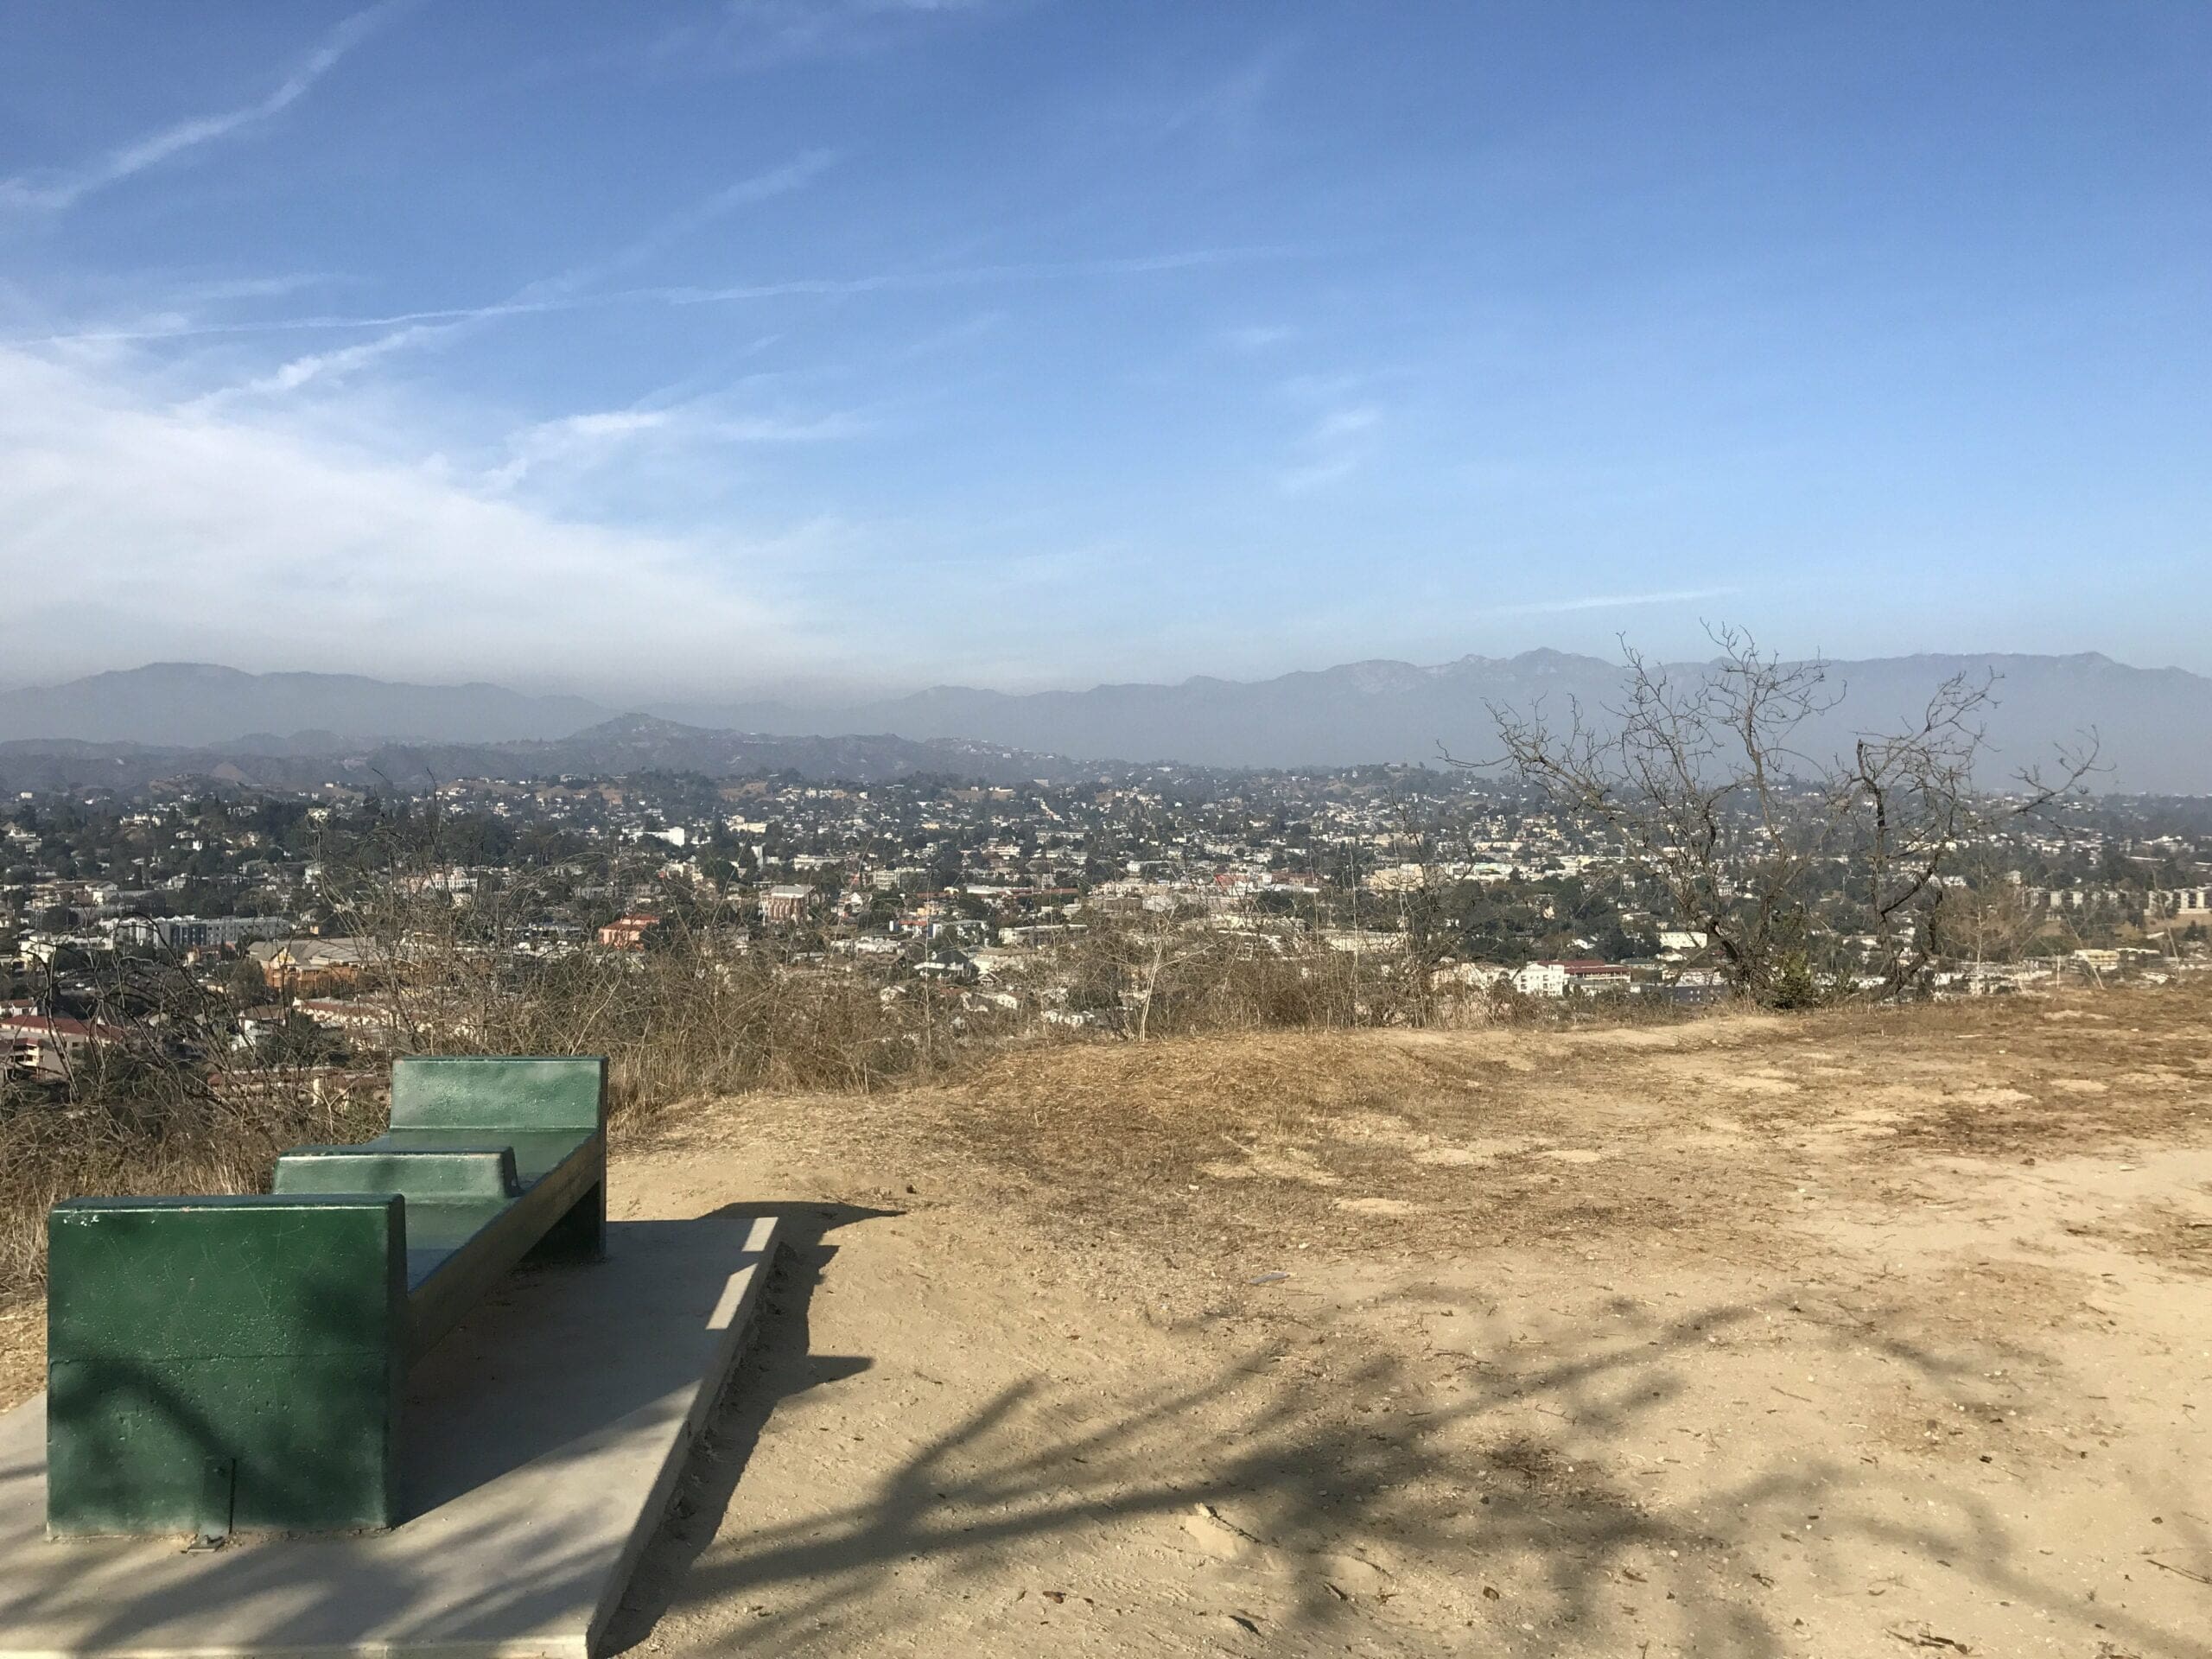 Ernest e debs regional park Los Angeles overlook